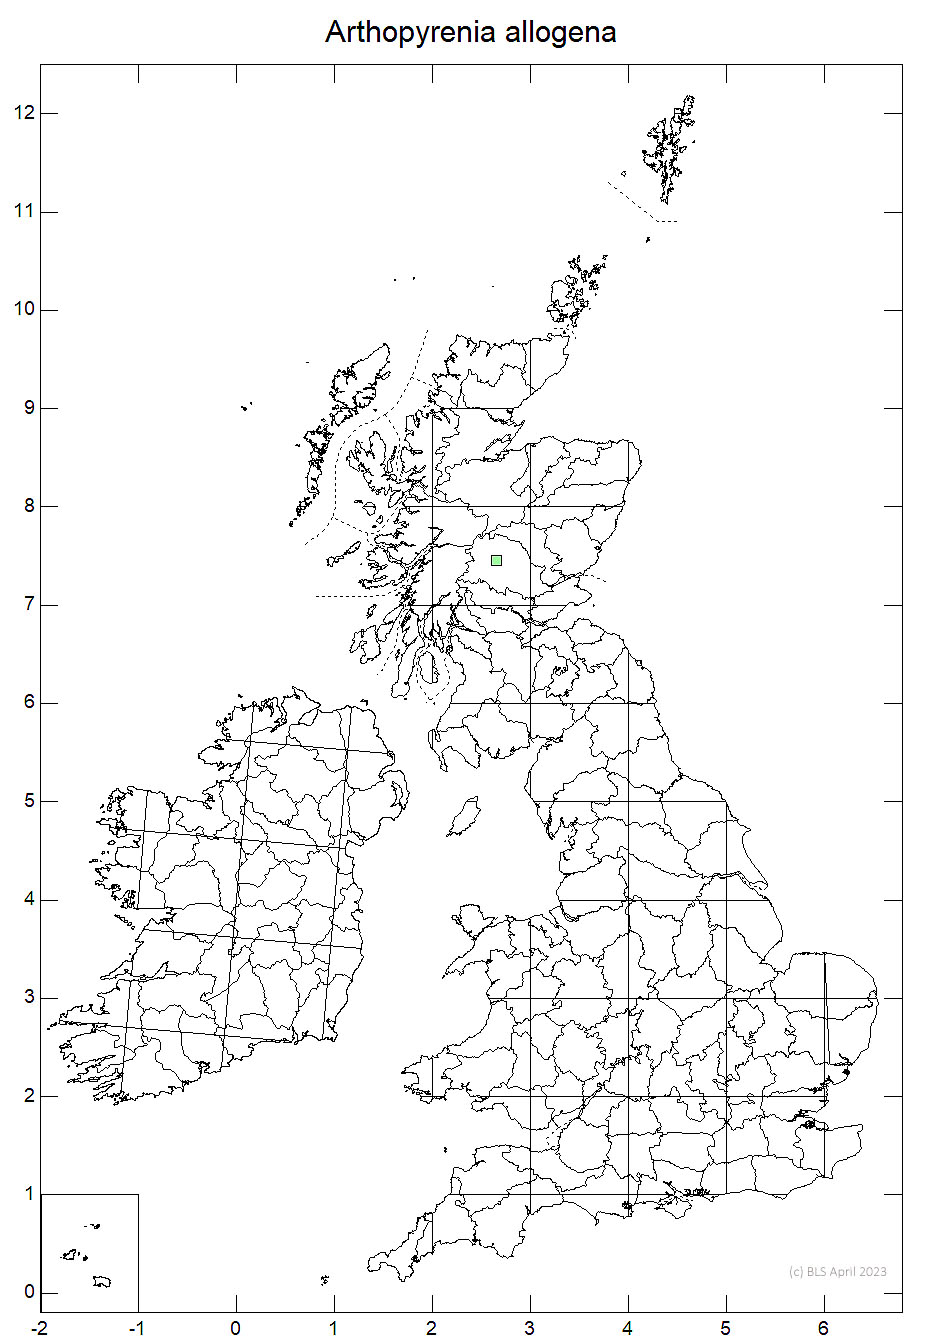 Arthopyrenia allogena 10km sq distribution map